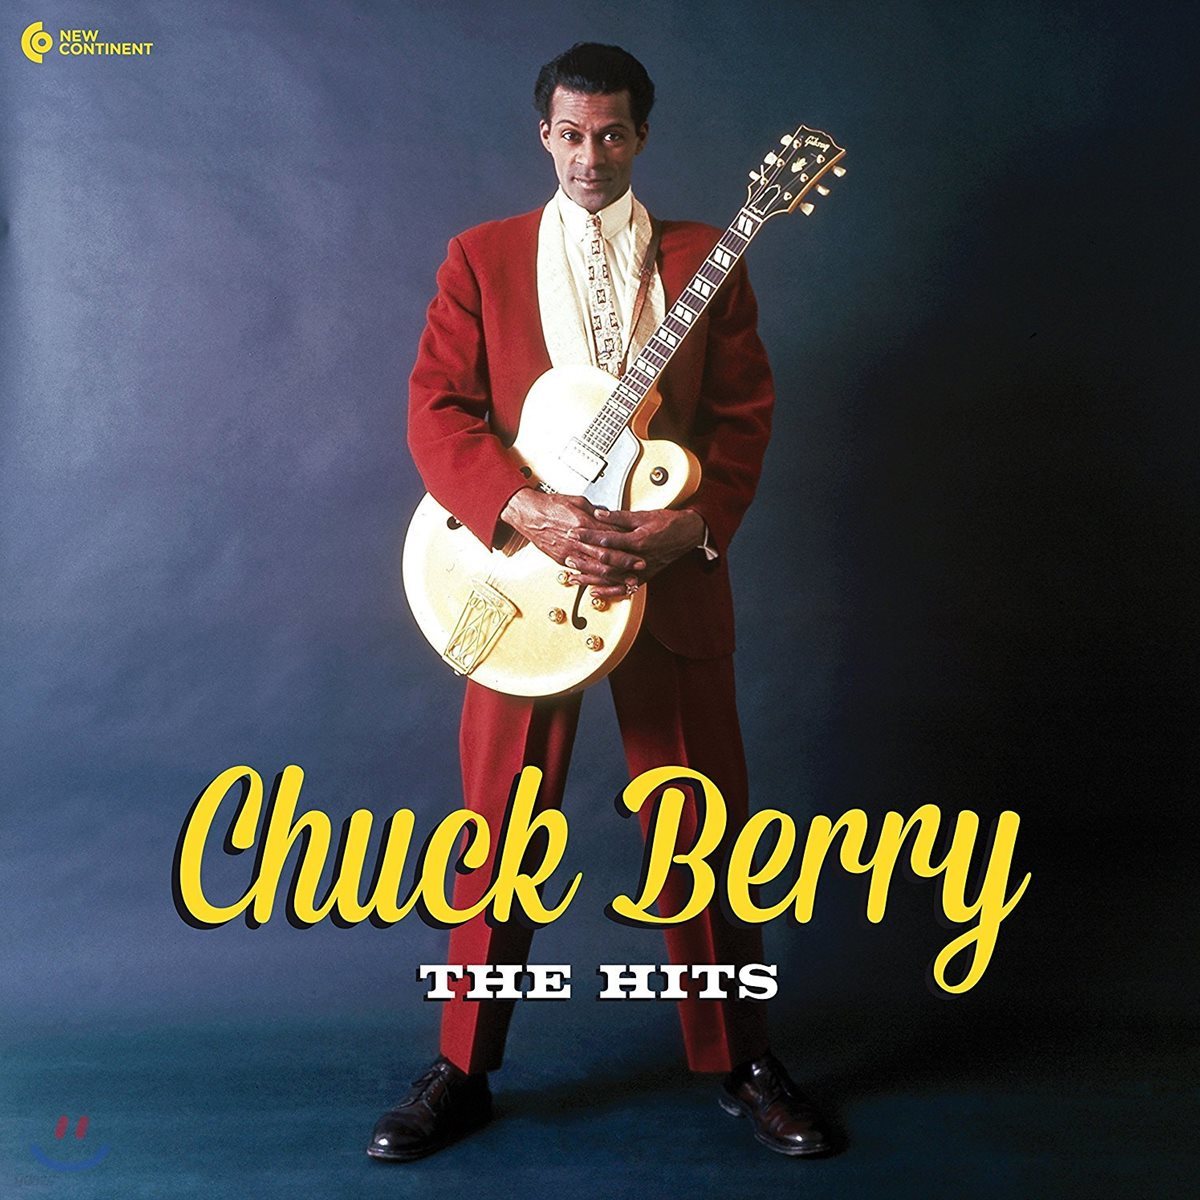 Chuck Berry (척 베리) - The Hits [LP]